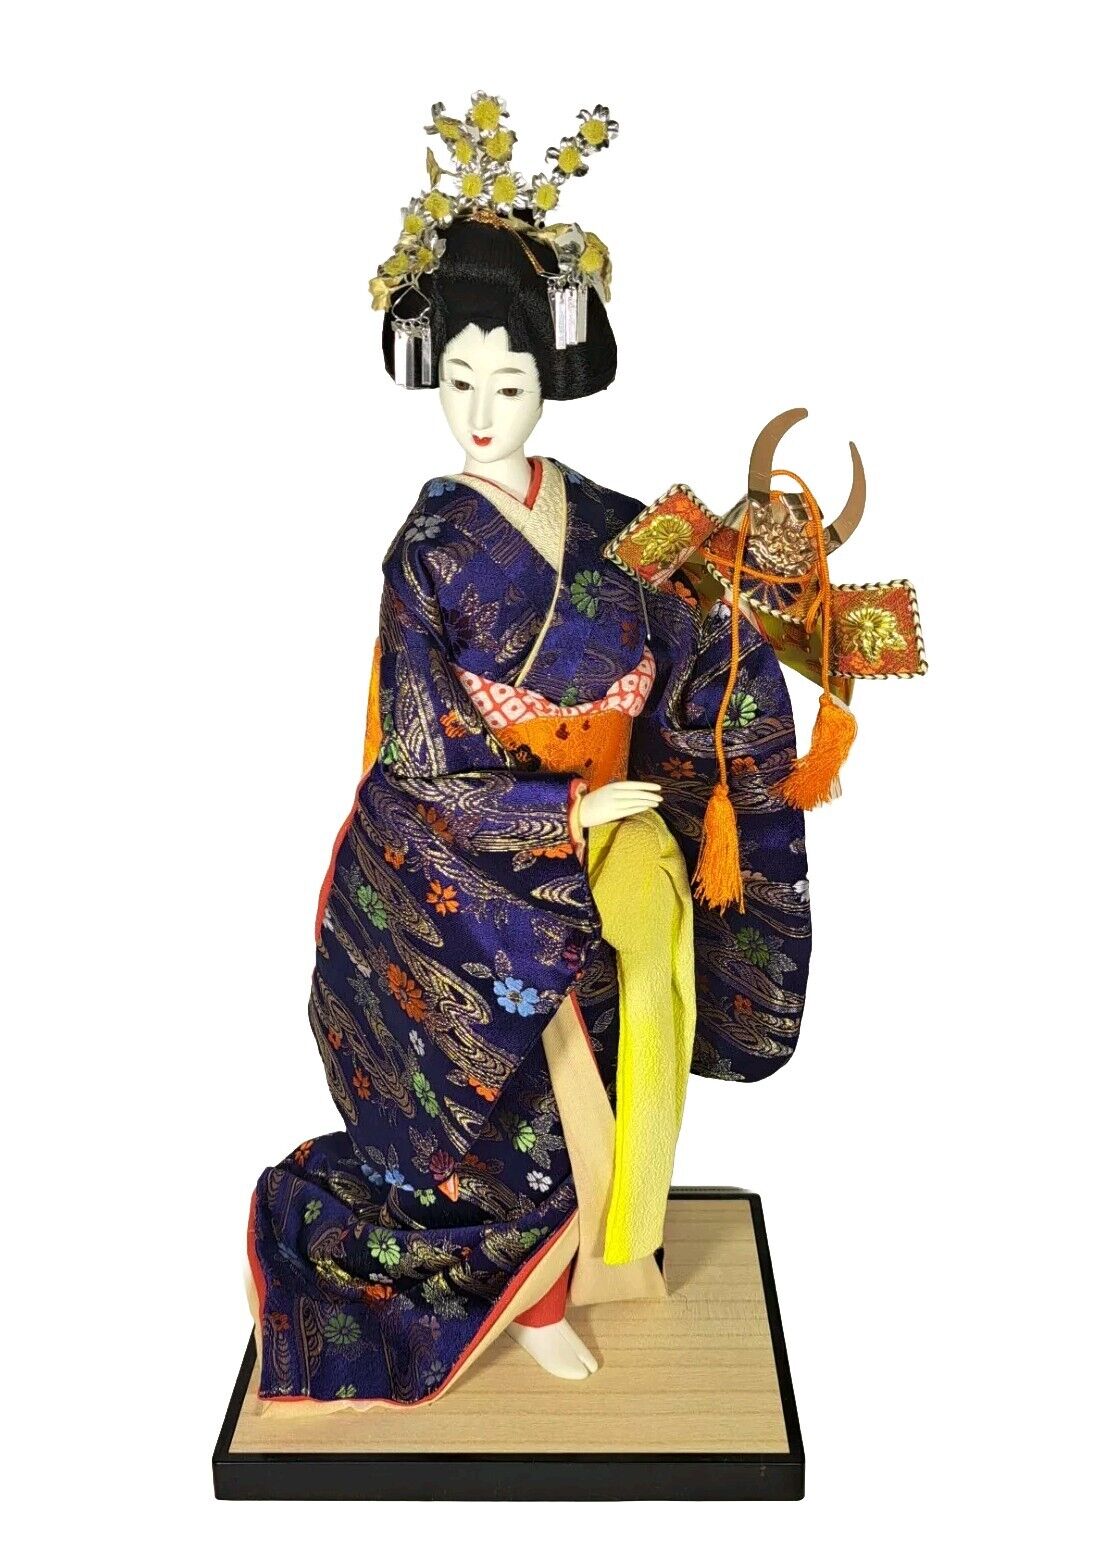 Vintage Japanese Doll Kimono Geisha Maiko Traditional Folk Craft Japan